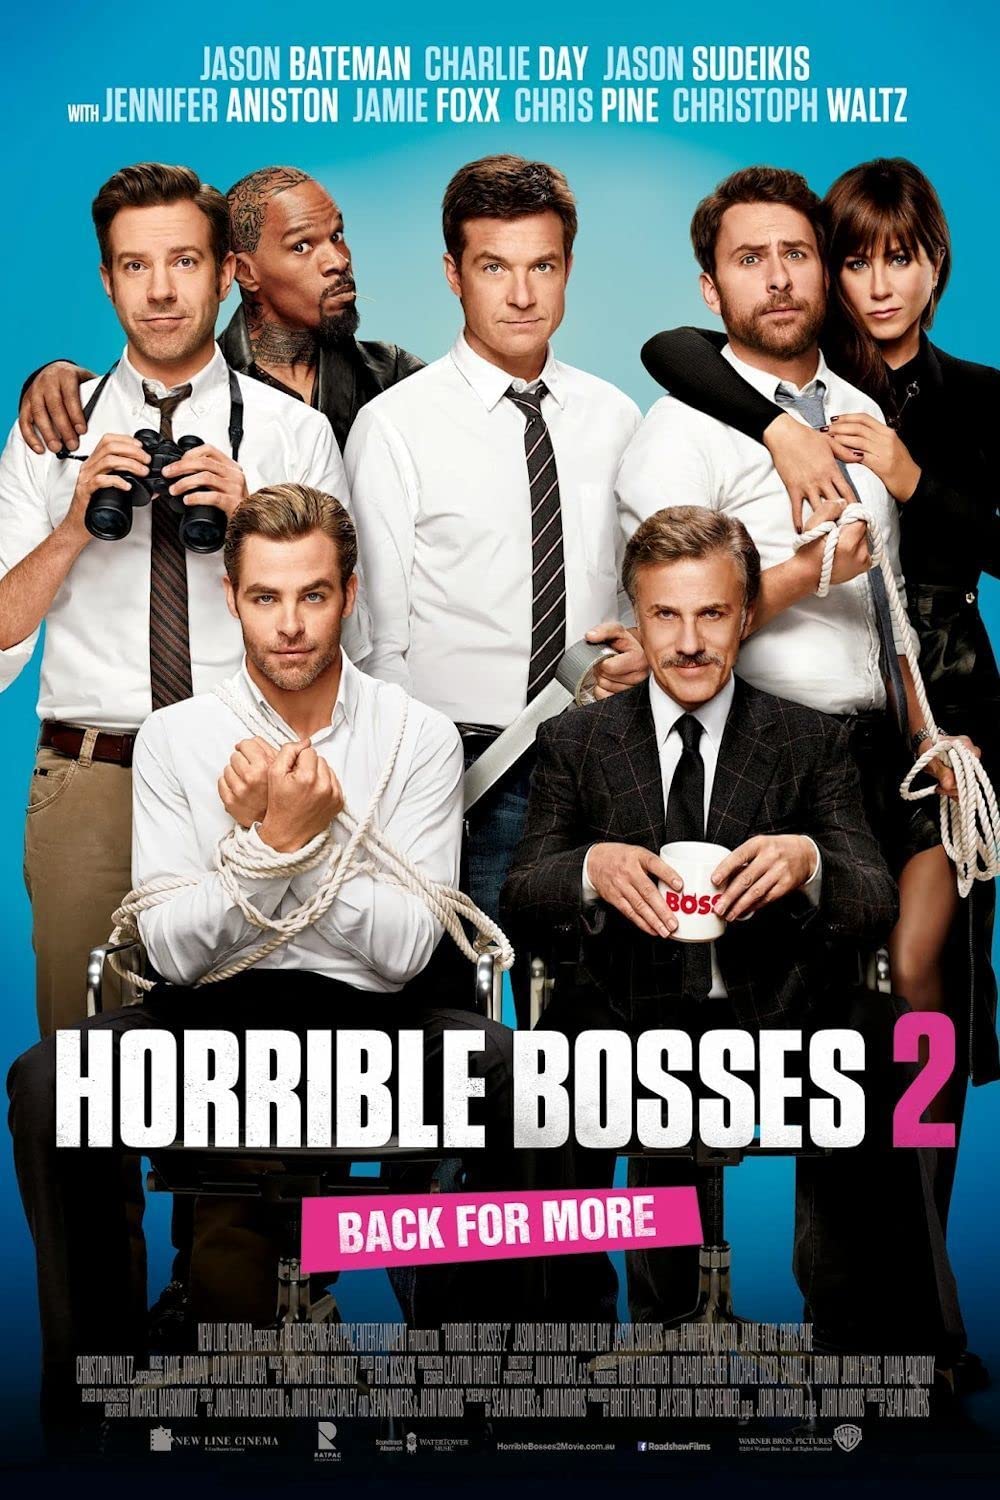 Horrible Bosses 2 ฮอร์ริเบิล บอสส์เซส รวมหัวสอย เจ้านายจอมแสบ 2 (2014)